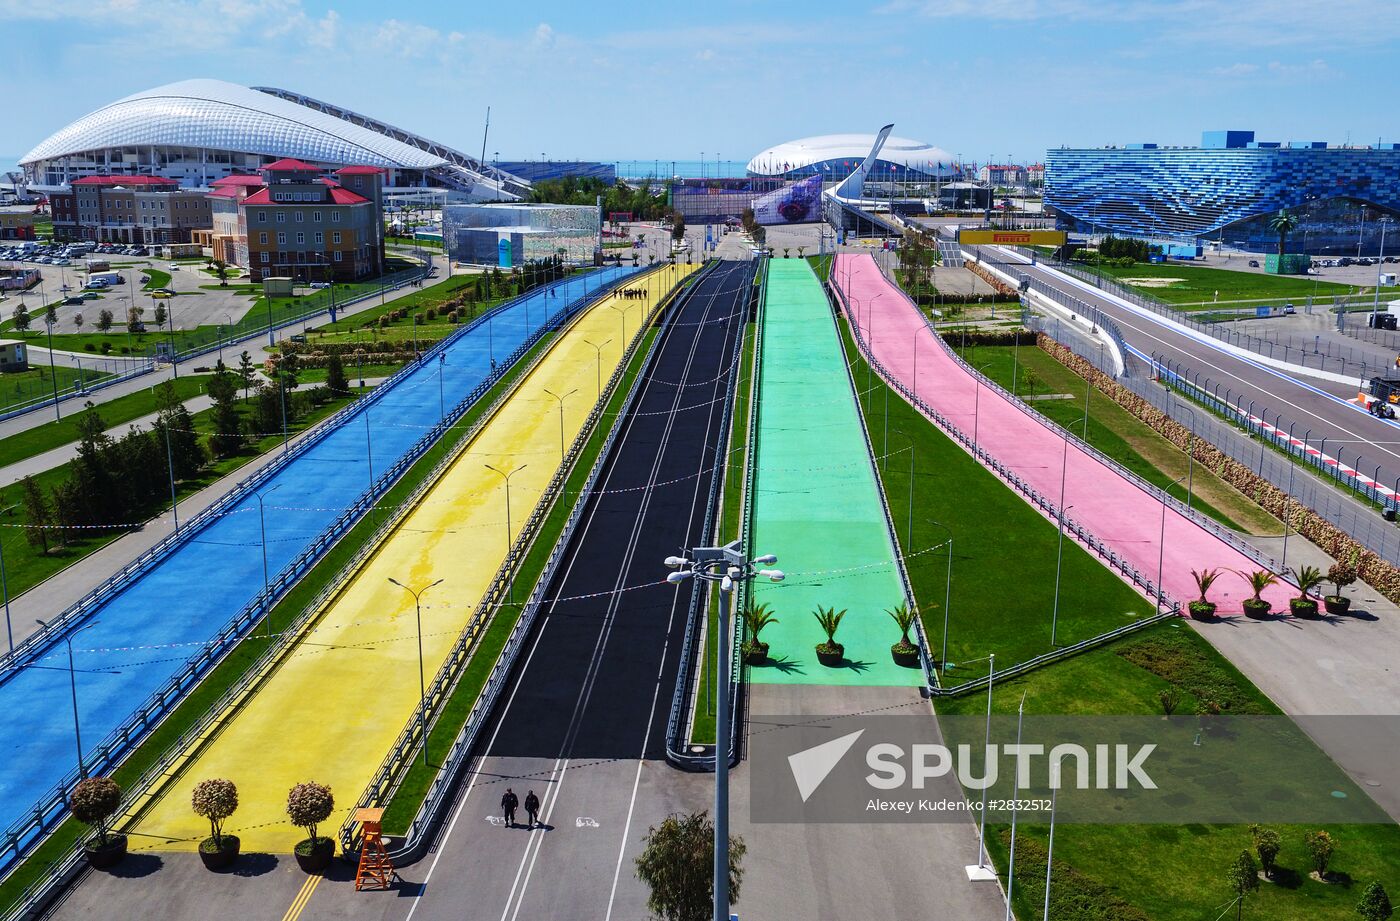 Sochi Autodrom and Olympic Park